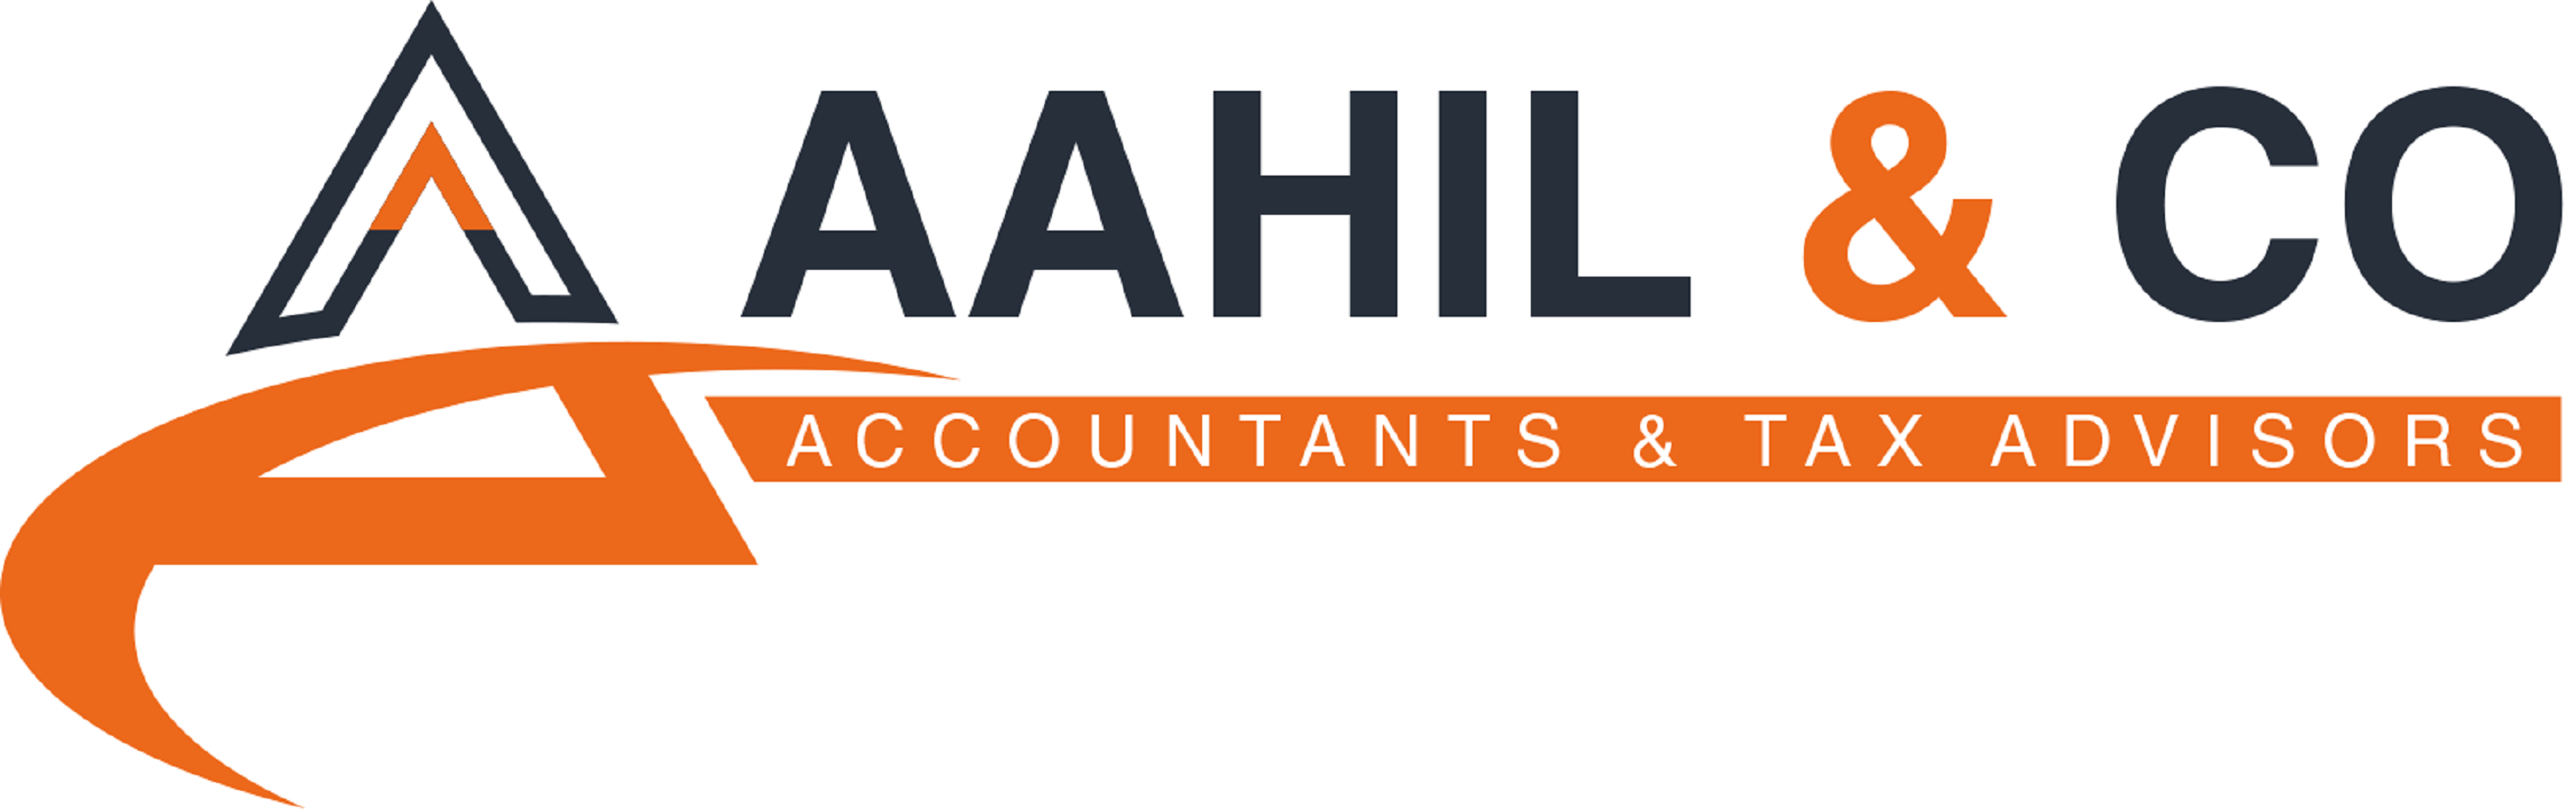 Aahil & Co Accountants and Tax Advisors